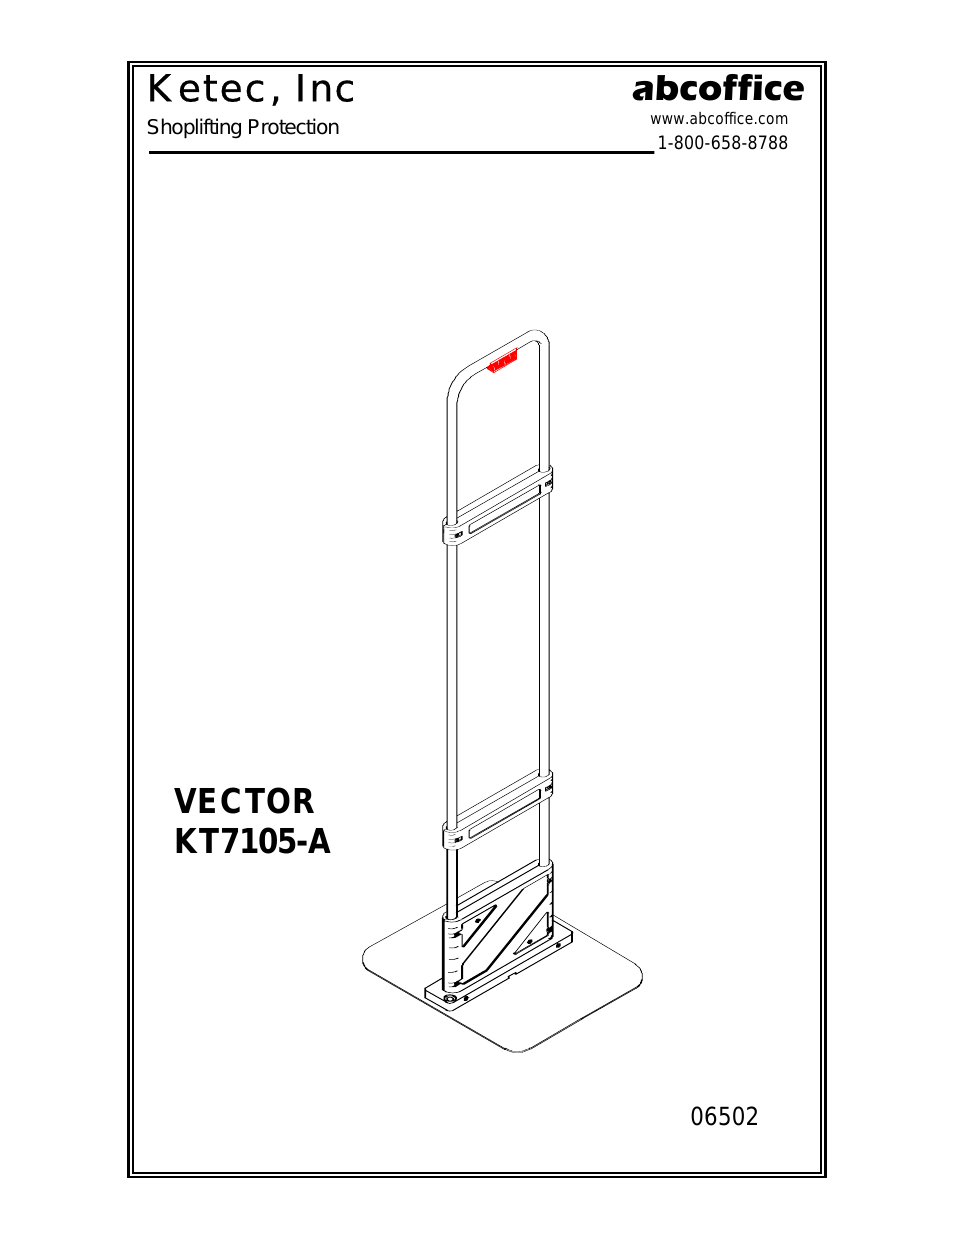 Vector KT7105-A